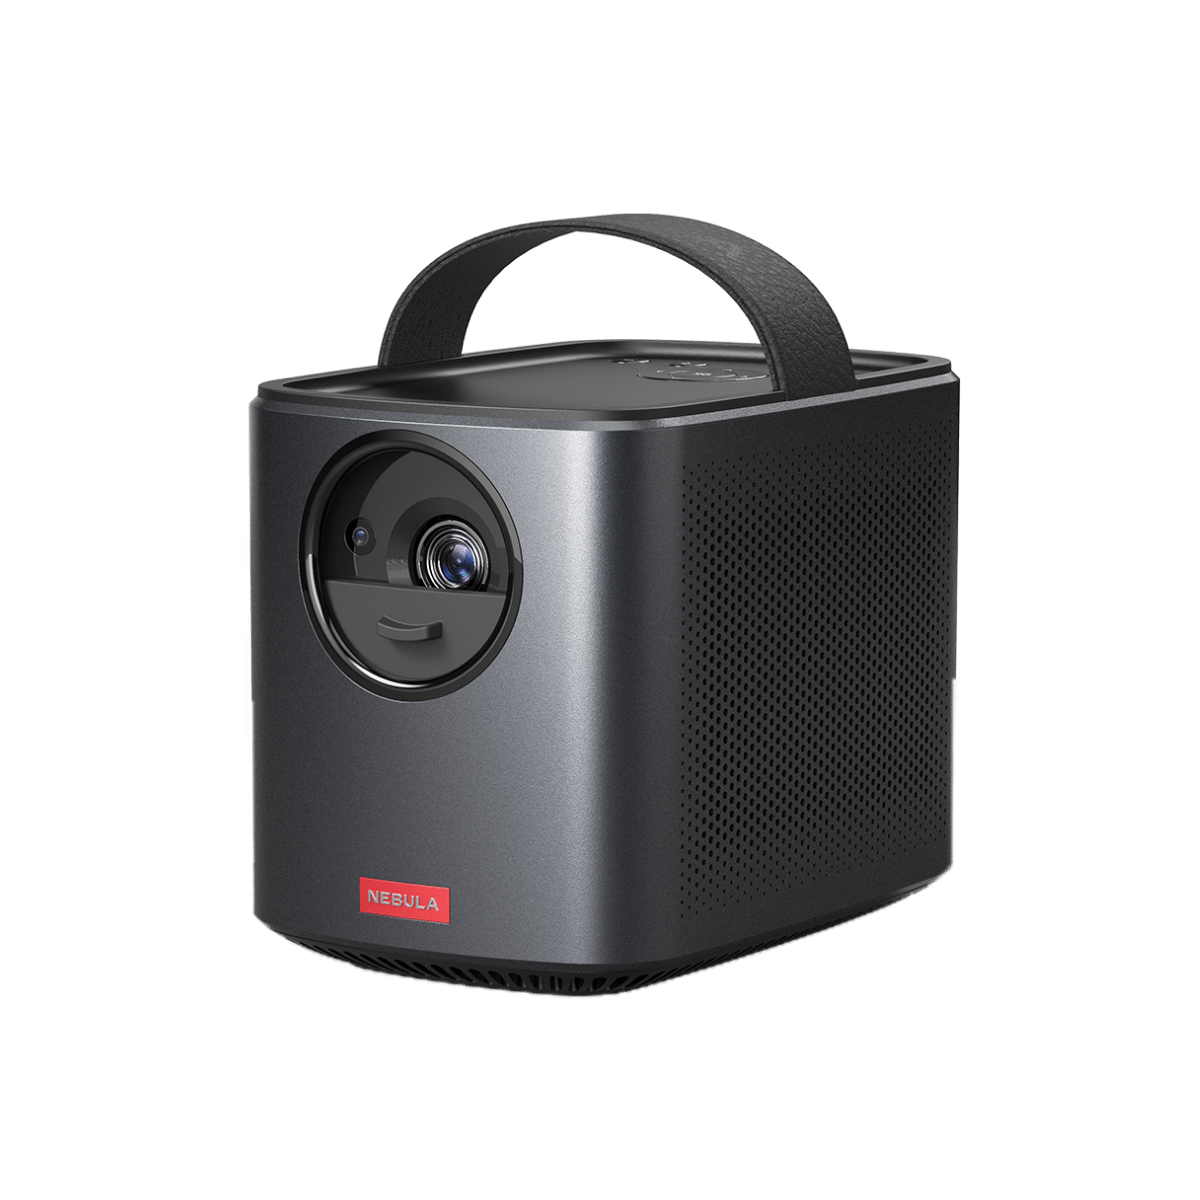 Mini proyector portatil HD -CINE HOME – luckyofertamk